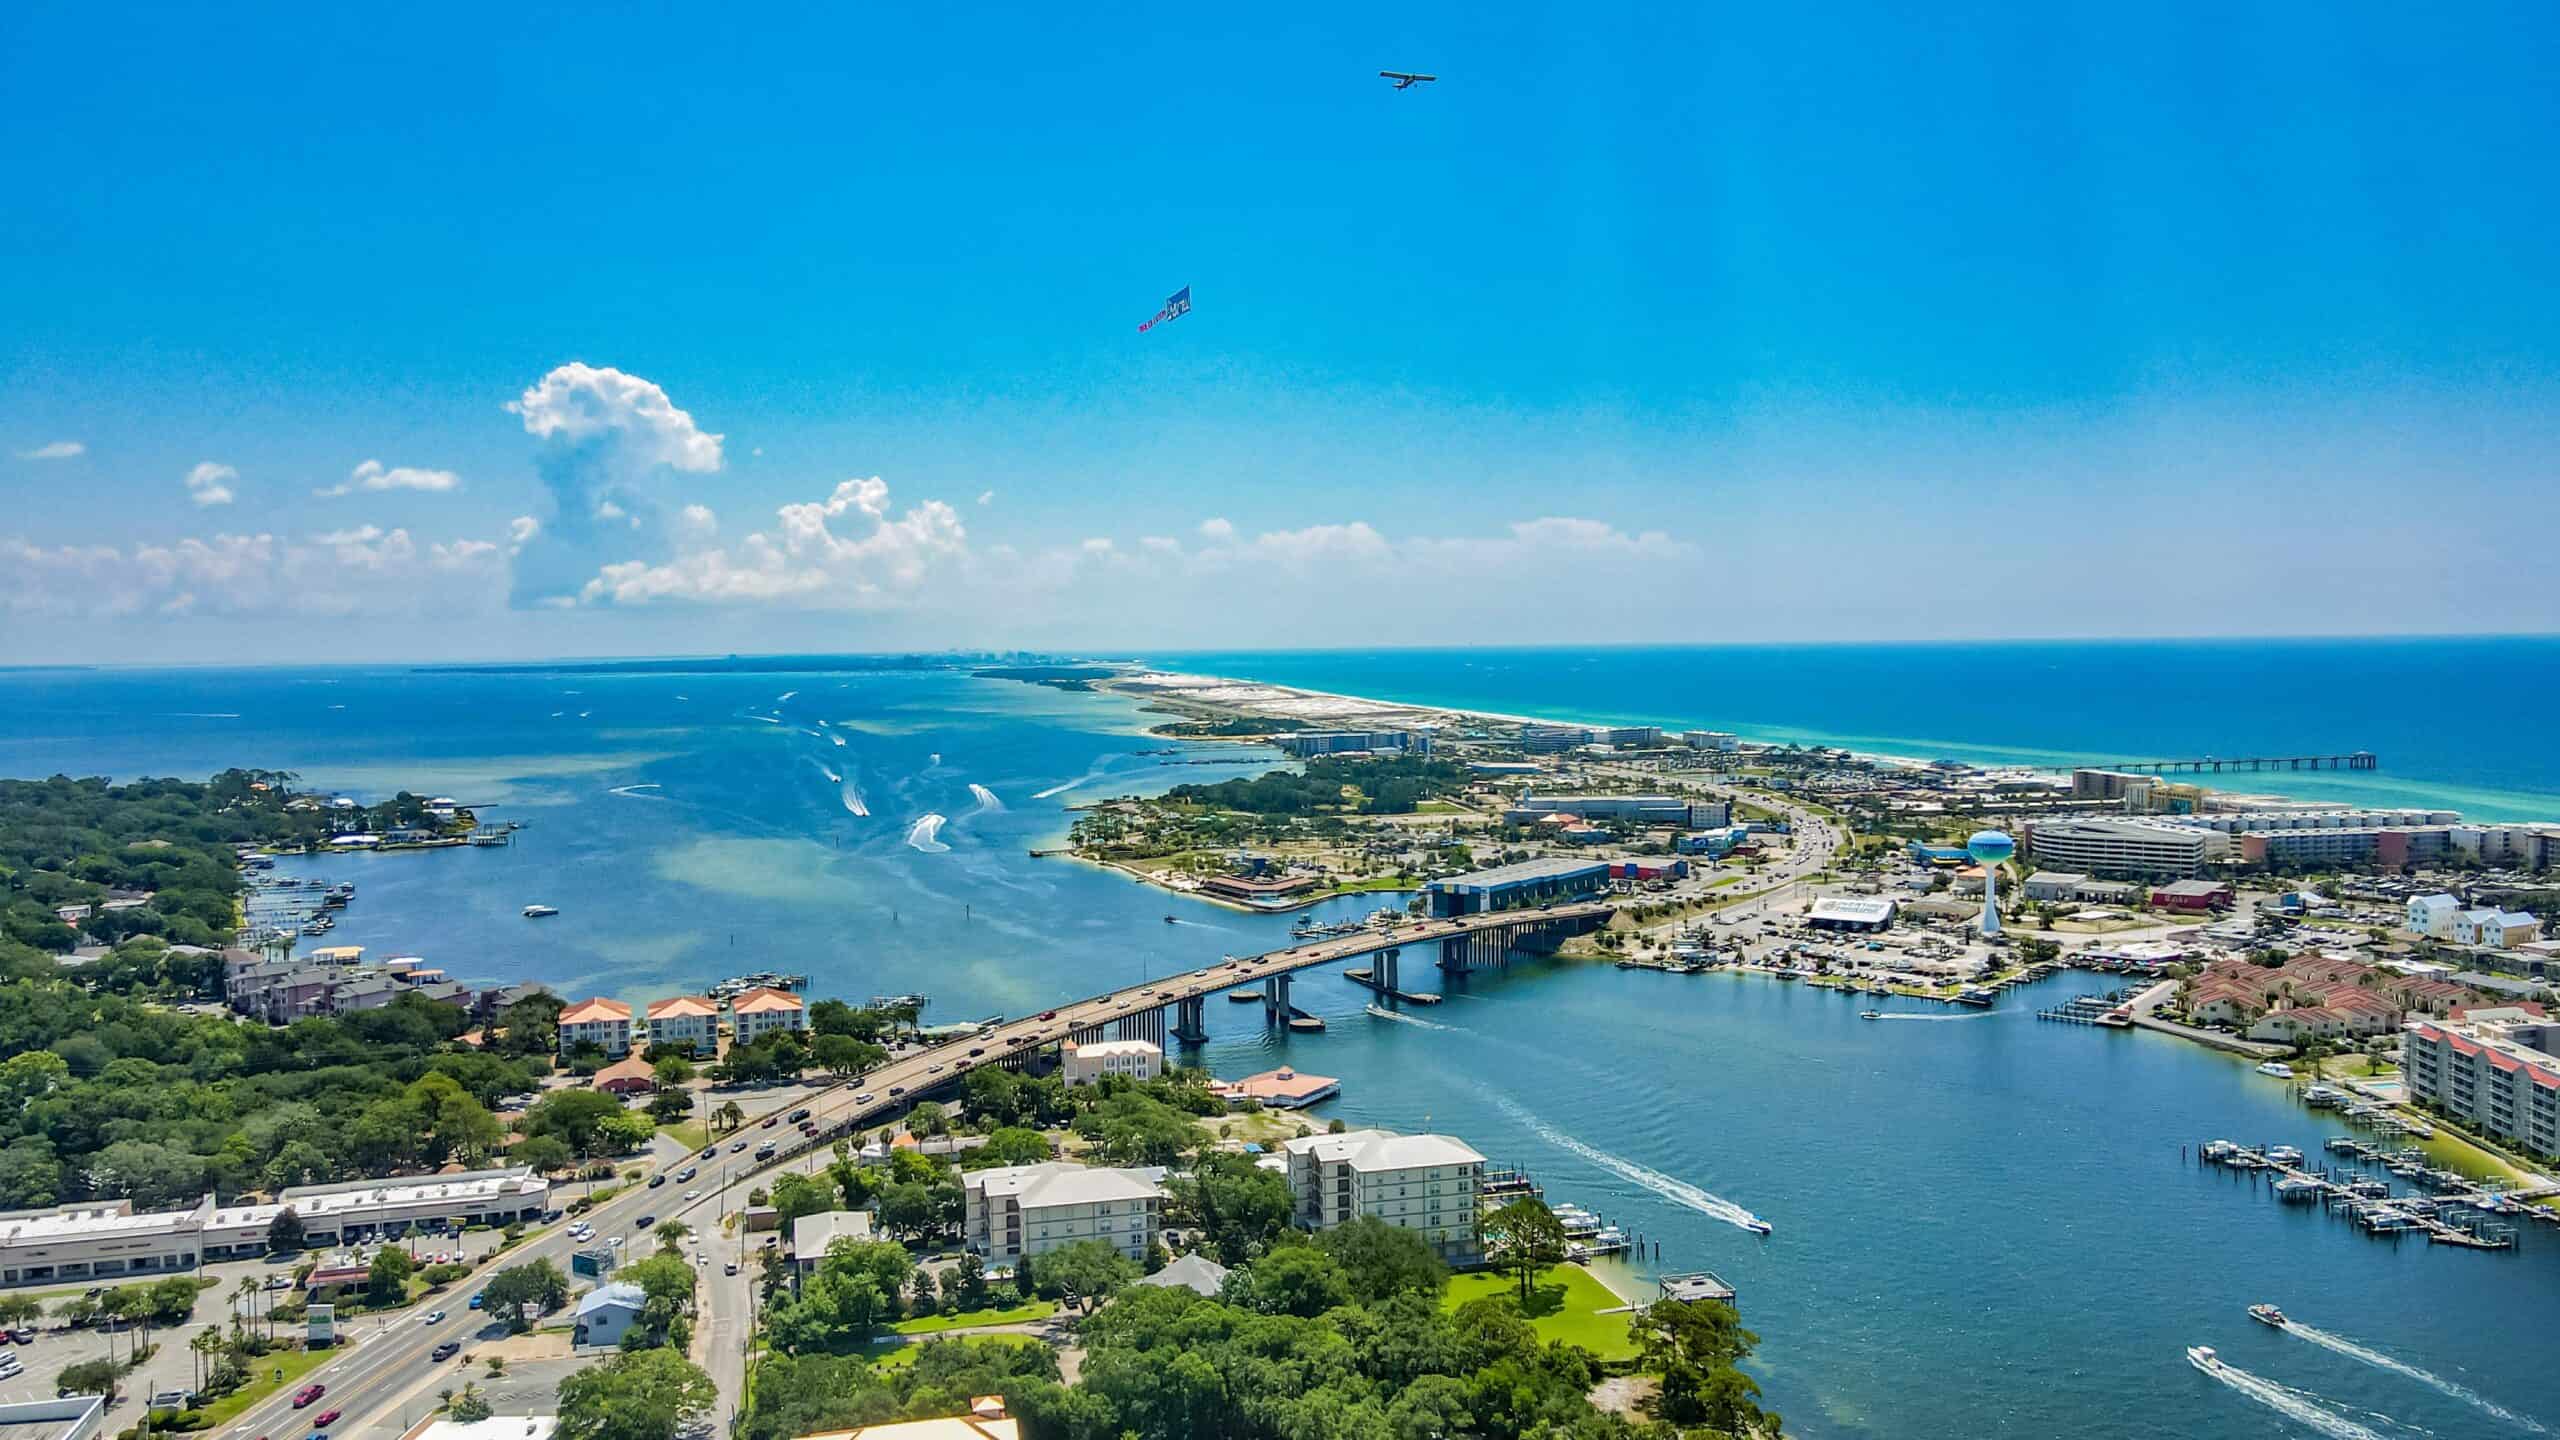 Crestview-Fort Walton Beach-Destin, Florida | Fort Walton Beach Florida 2022 Drone Aerial